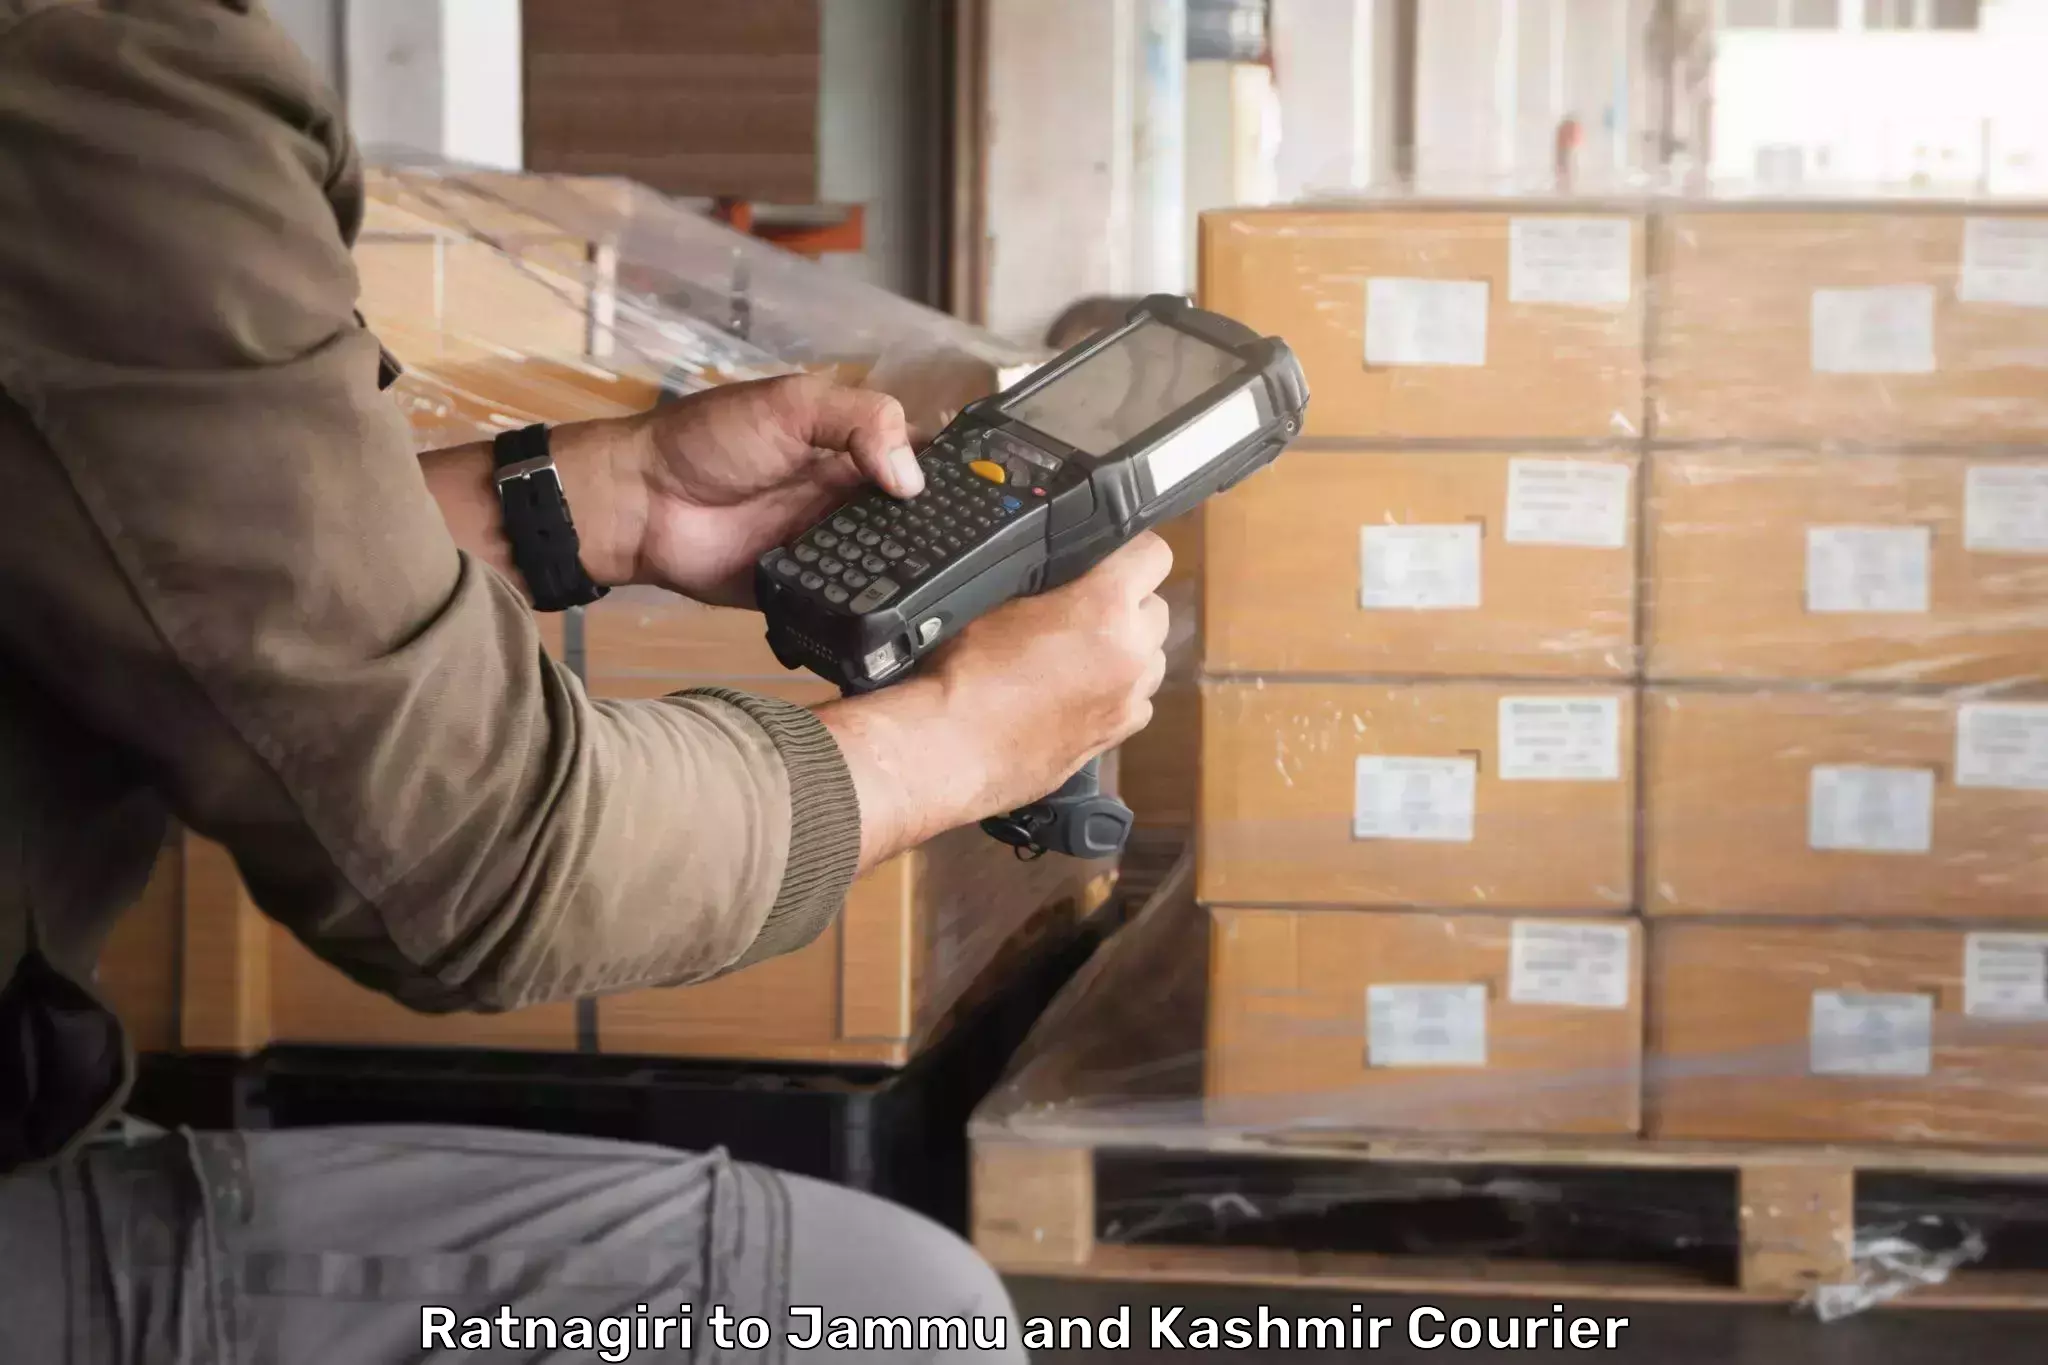 Courier service partnerships Ratnagiri to Srinagar Kashmir